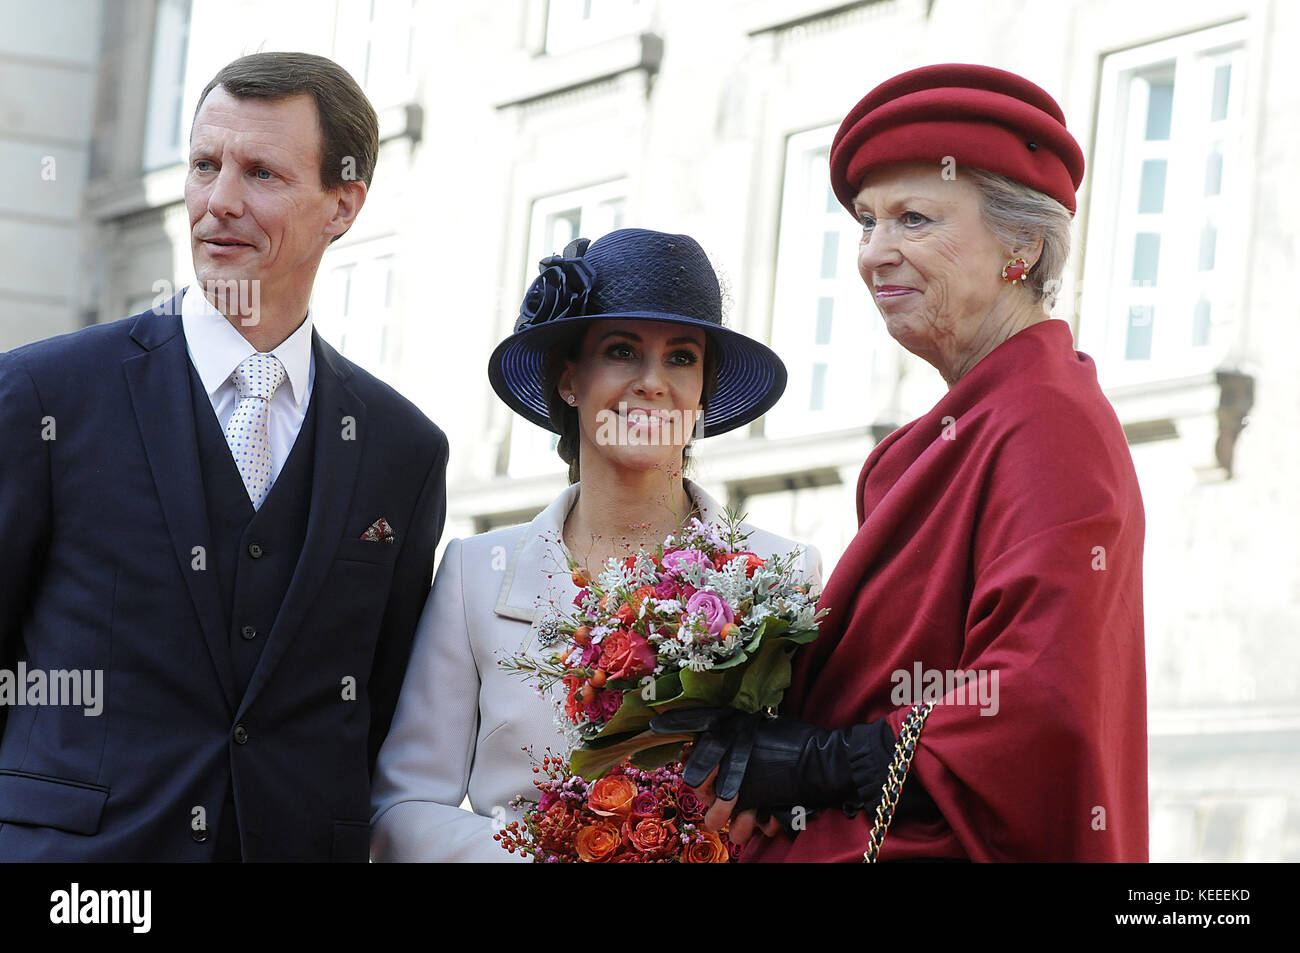 copenhague-dinamarca-03-de-octubre-de-2017-la-reina-margrethe-ii-la-princesa-benedikte-el-principe-joachim-y-el-principe-anne-marie-y-la-pricera-de-la-corona-maria-an-keeekd.jpg